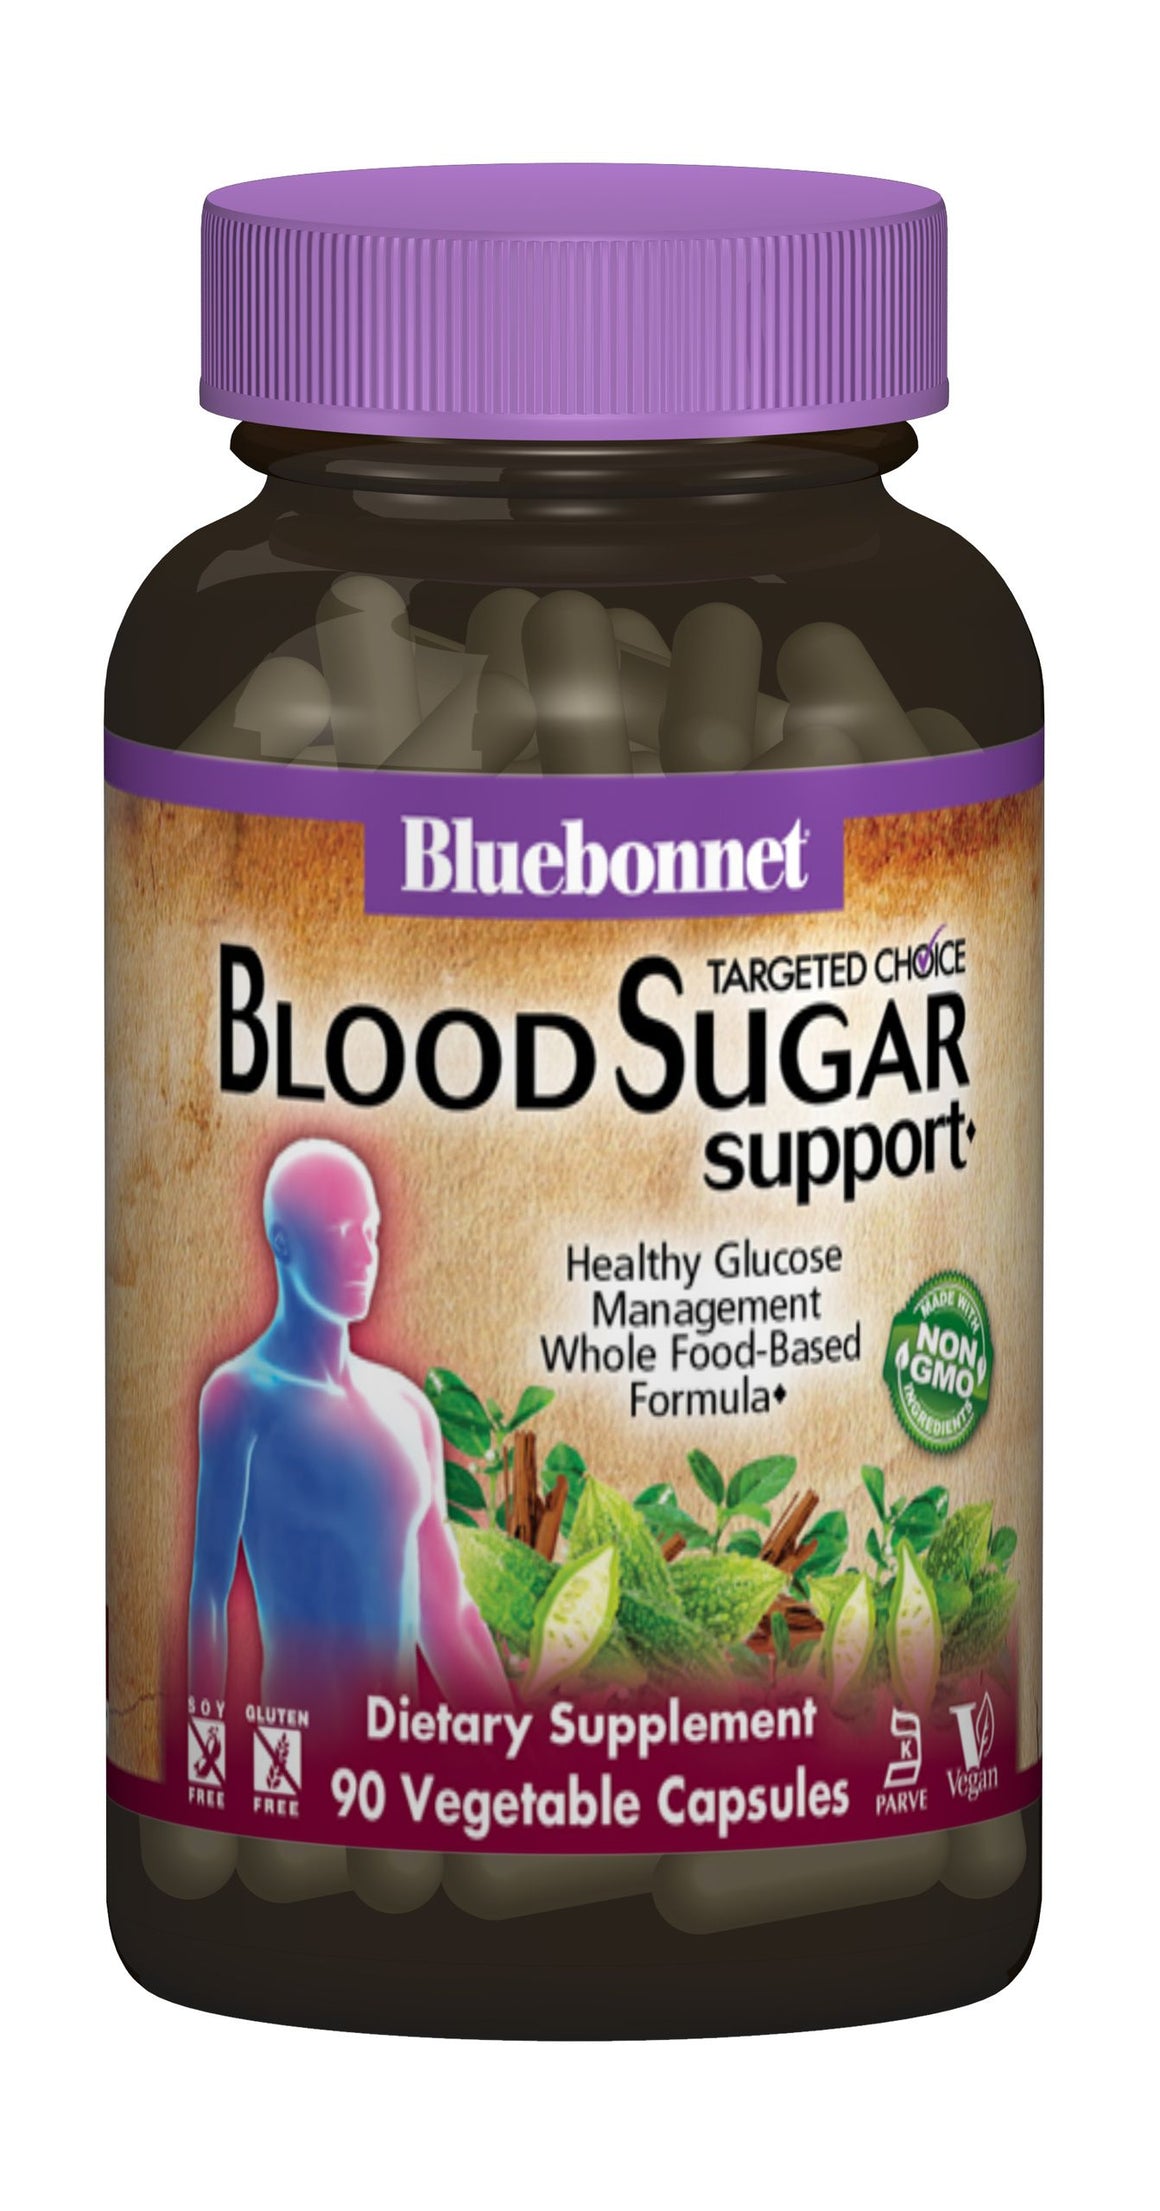 A bottle of Bluebonnet Targeted Choice® Blood Sugar Support